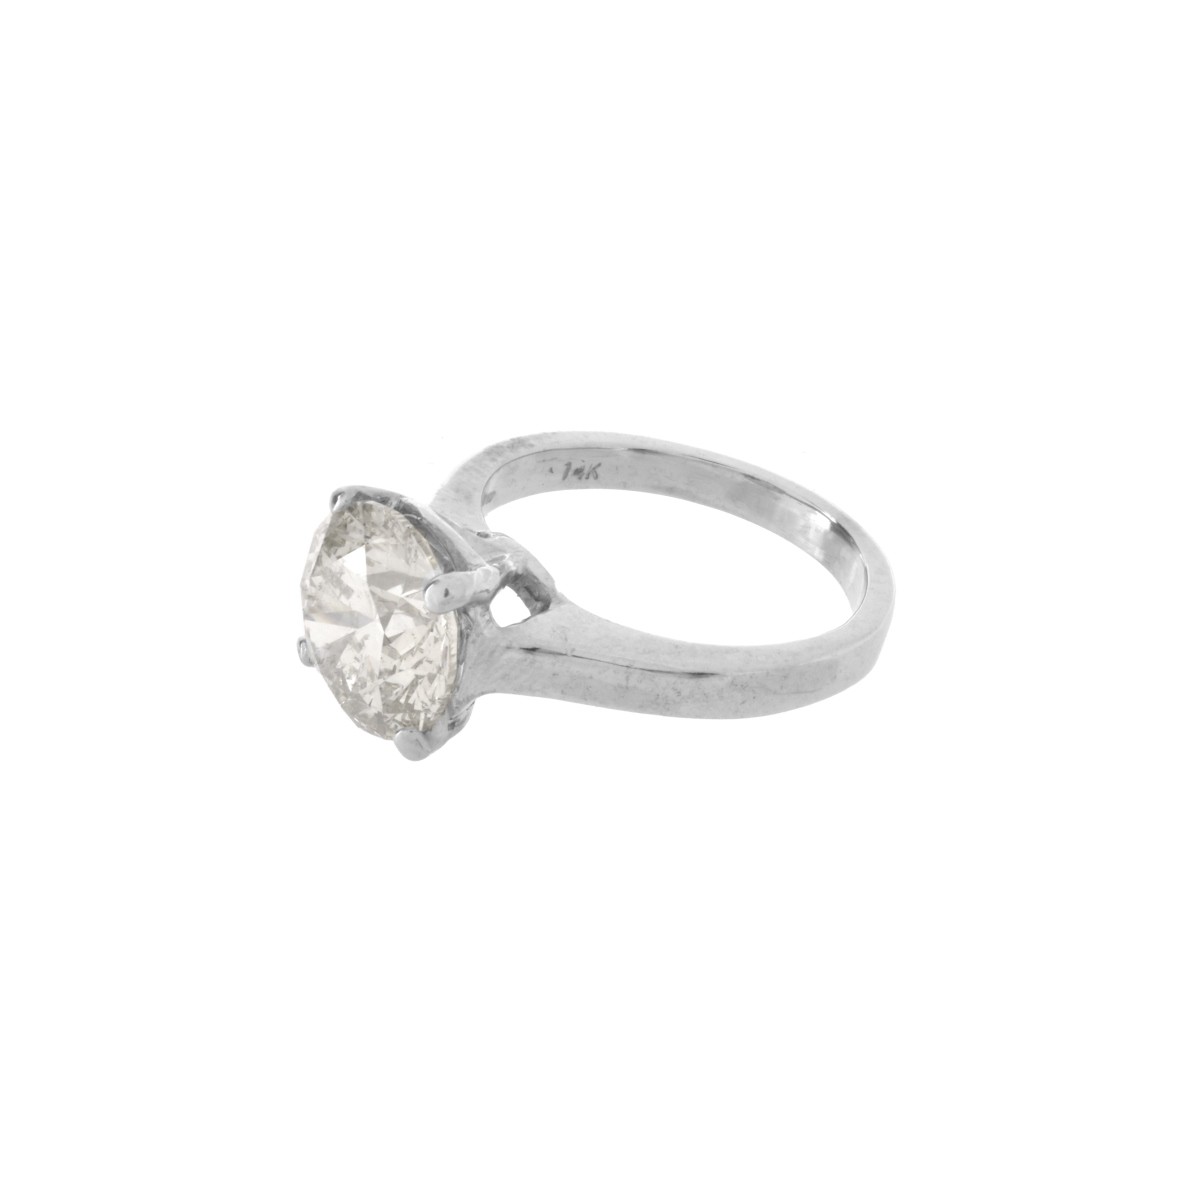 IGL Diamond and 14K Engagement Ring